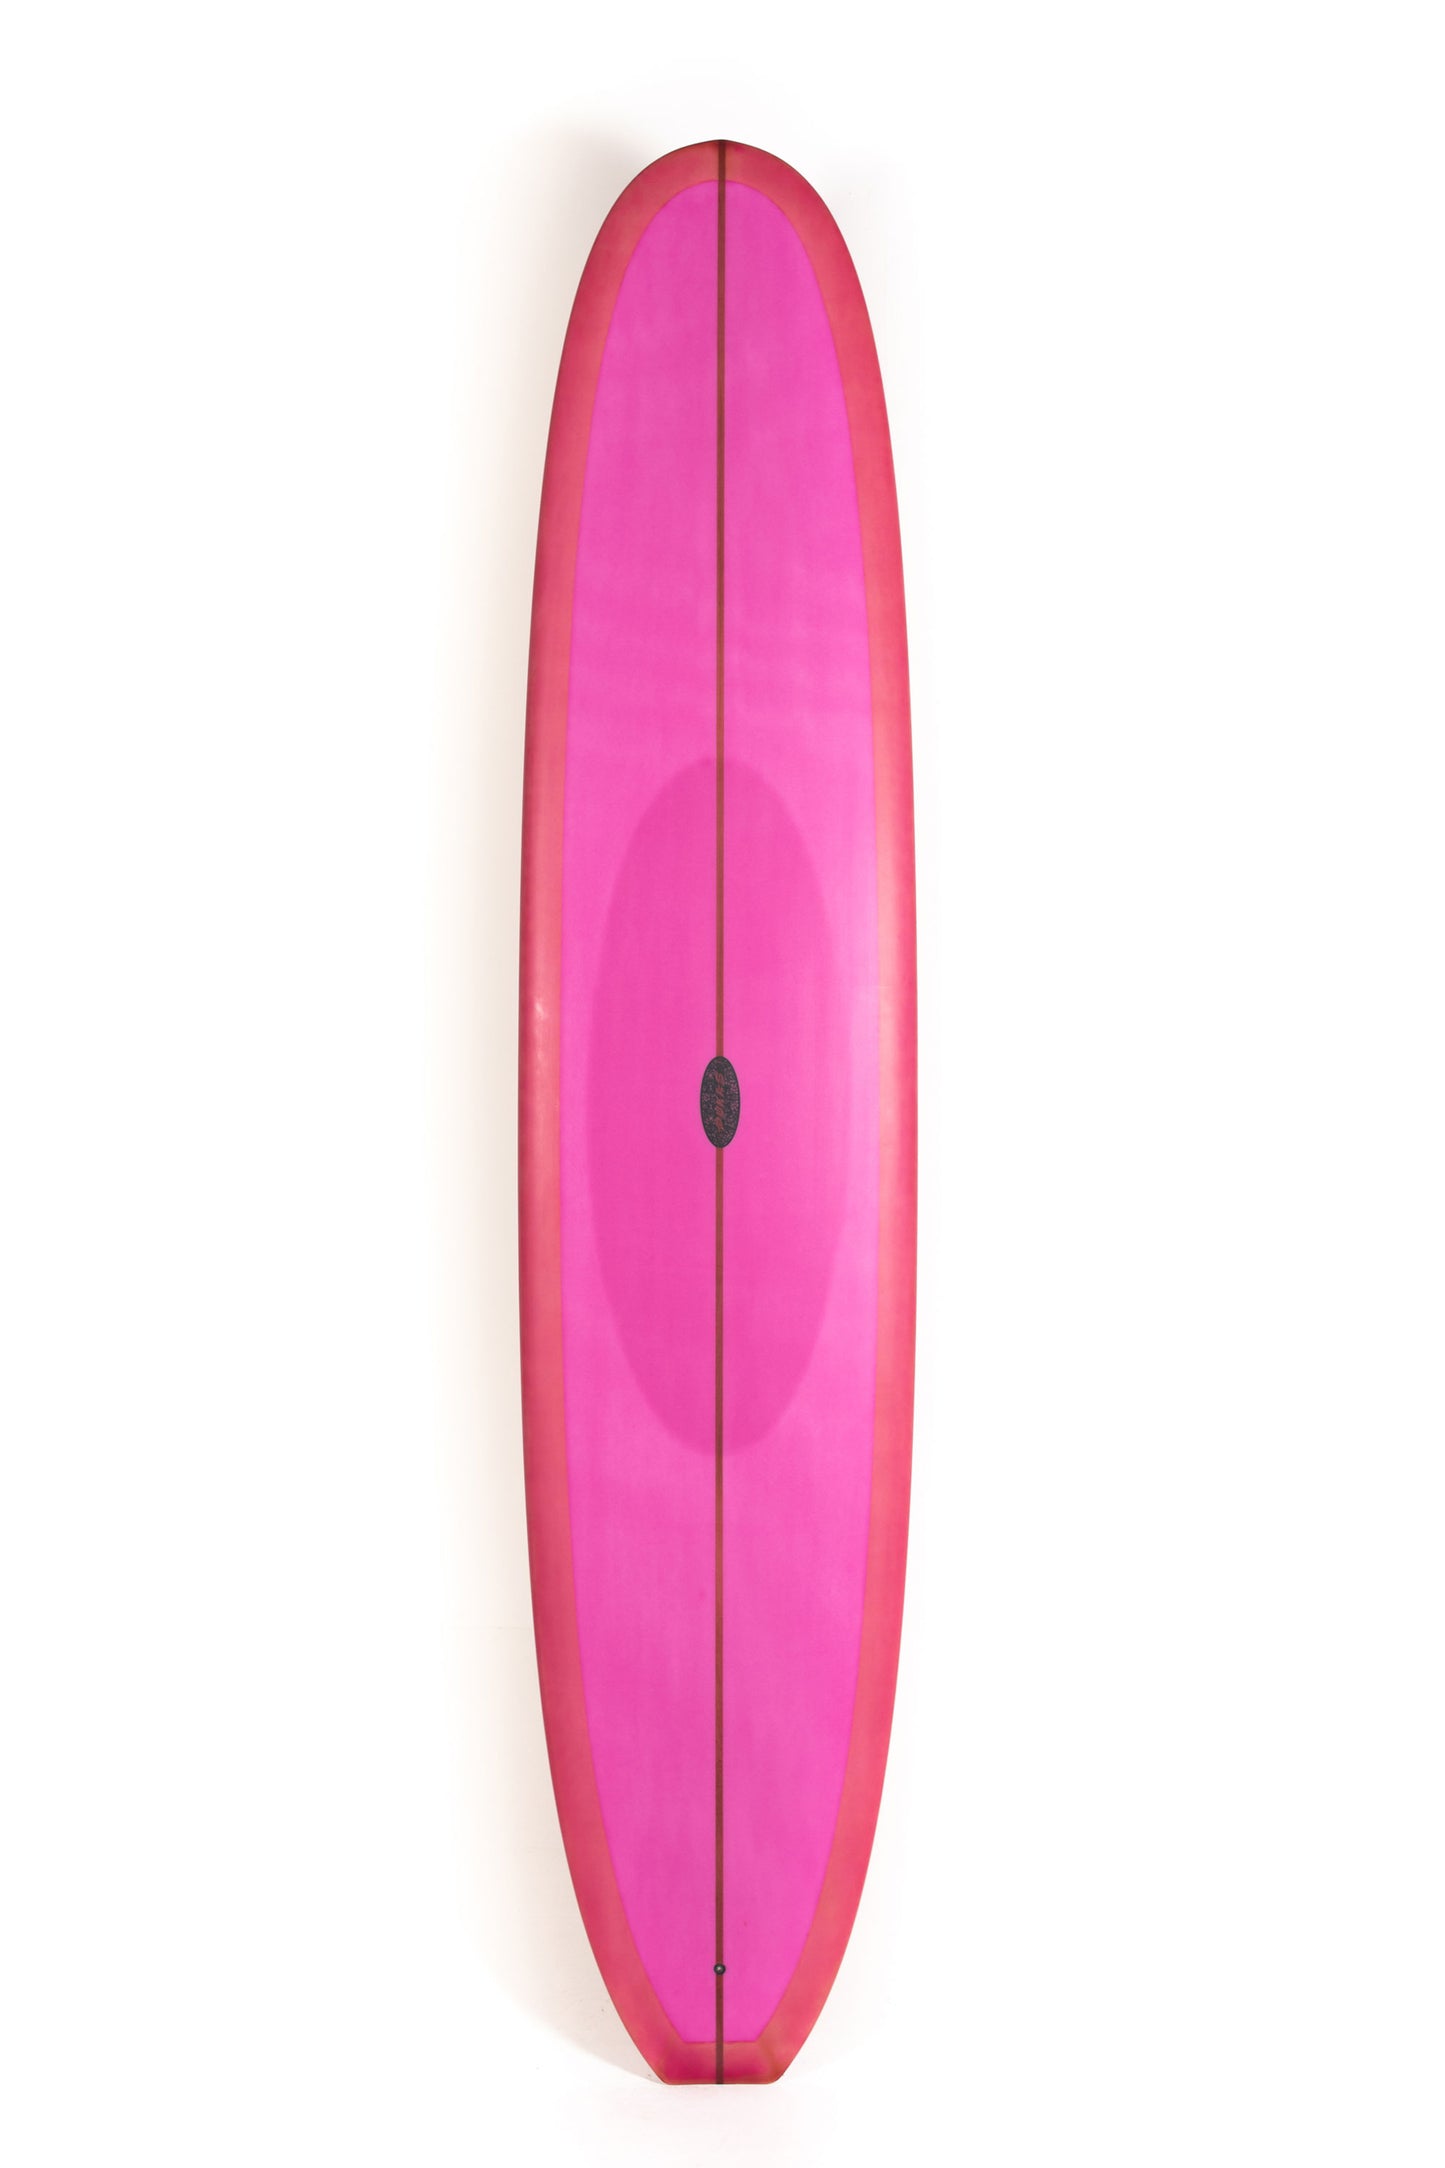 Pukas Surfboards - MAYFLOWER by Axel Lorentz -  9'2" x 22 3/4 x 3 x 73.33L - AX09729